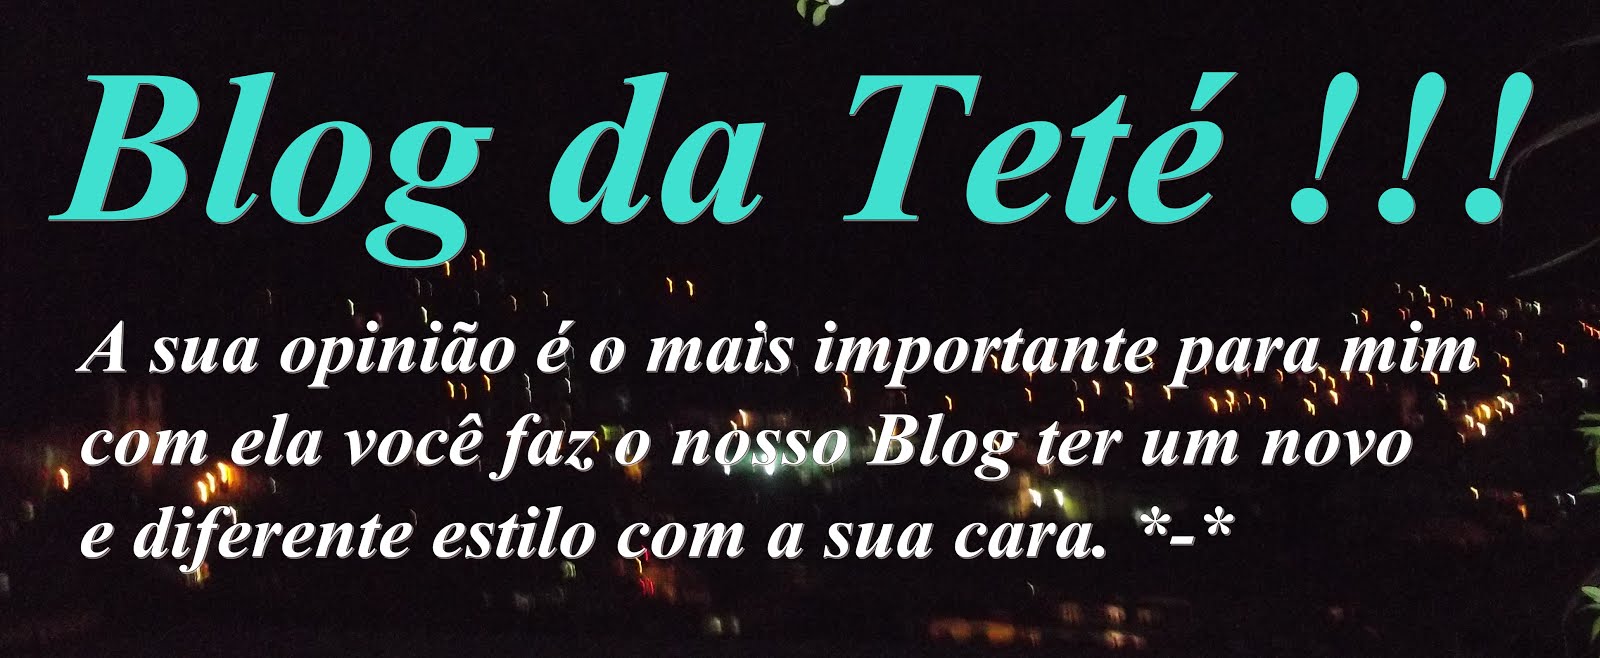 Blog da Teté